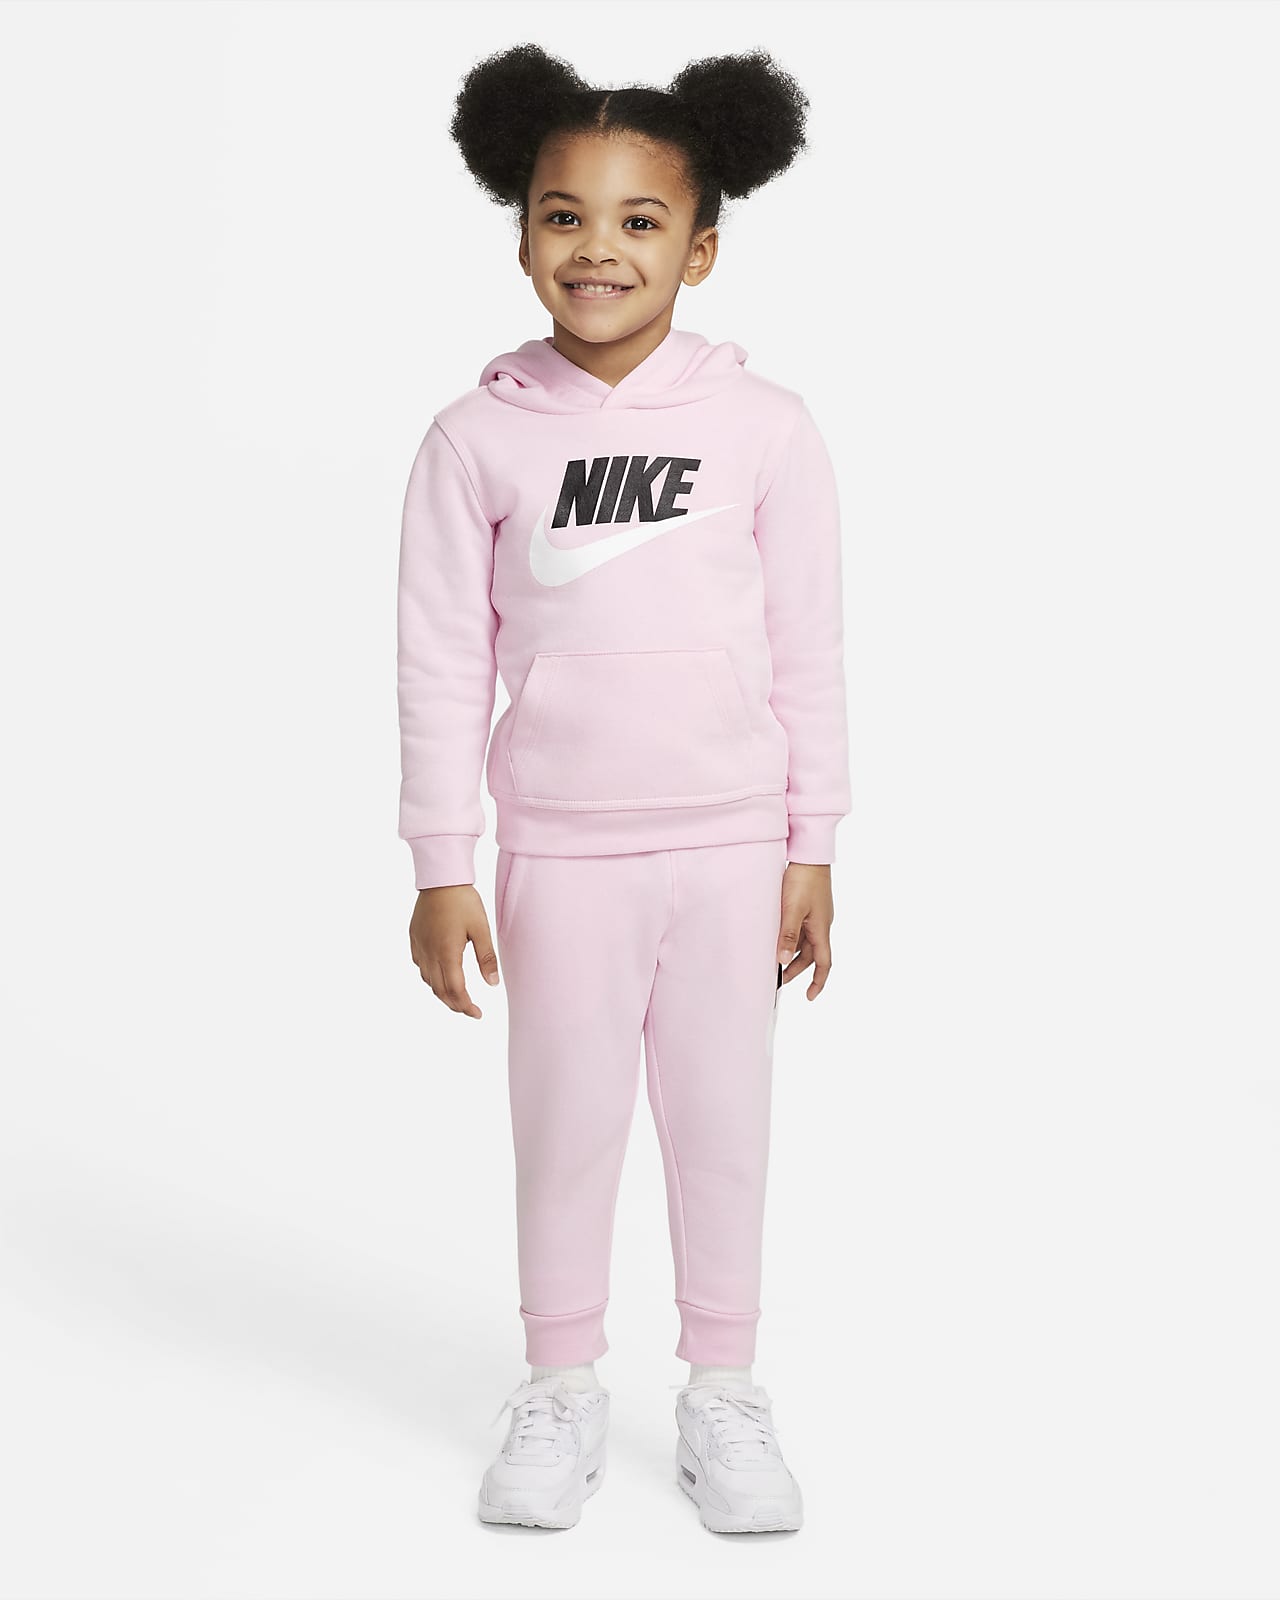 Nike Sportswear Club Fleece Toddler Pants. Nike.com